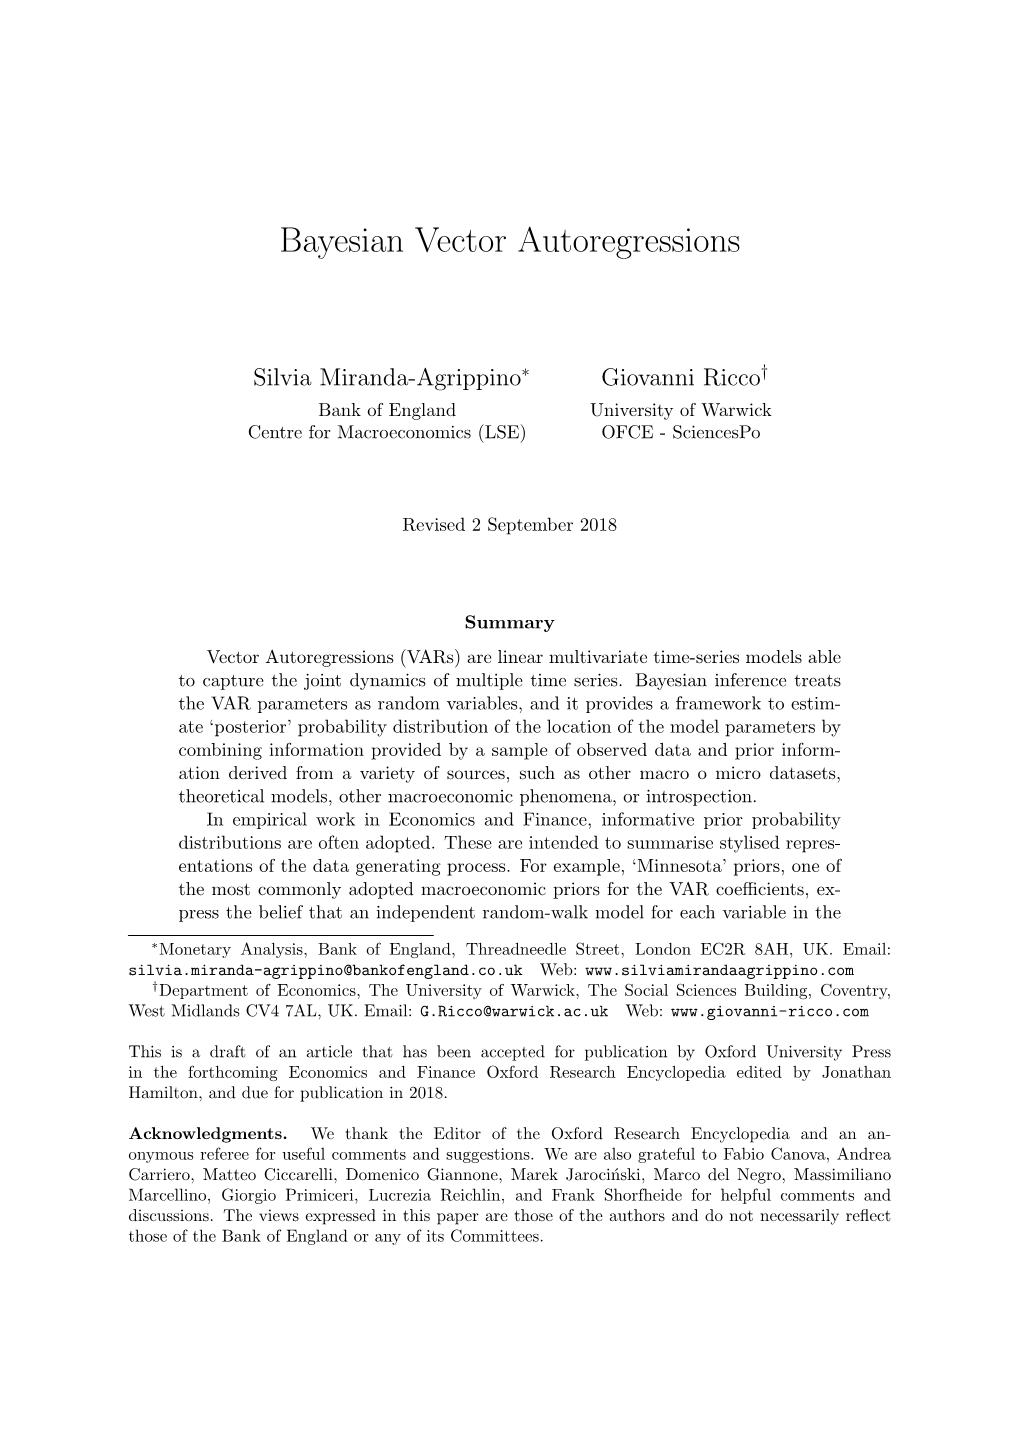 Bayesian Vector Autoregressions